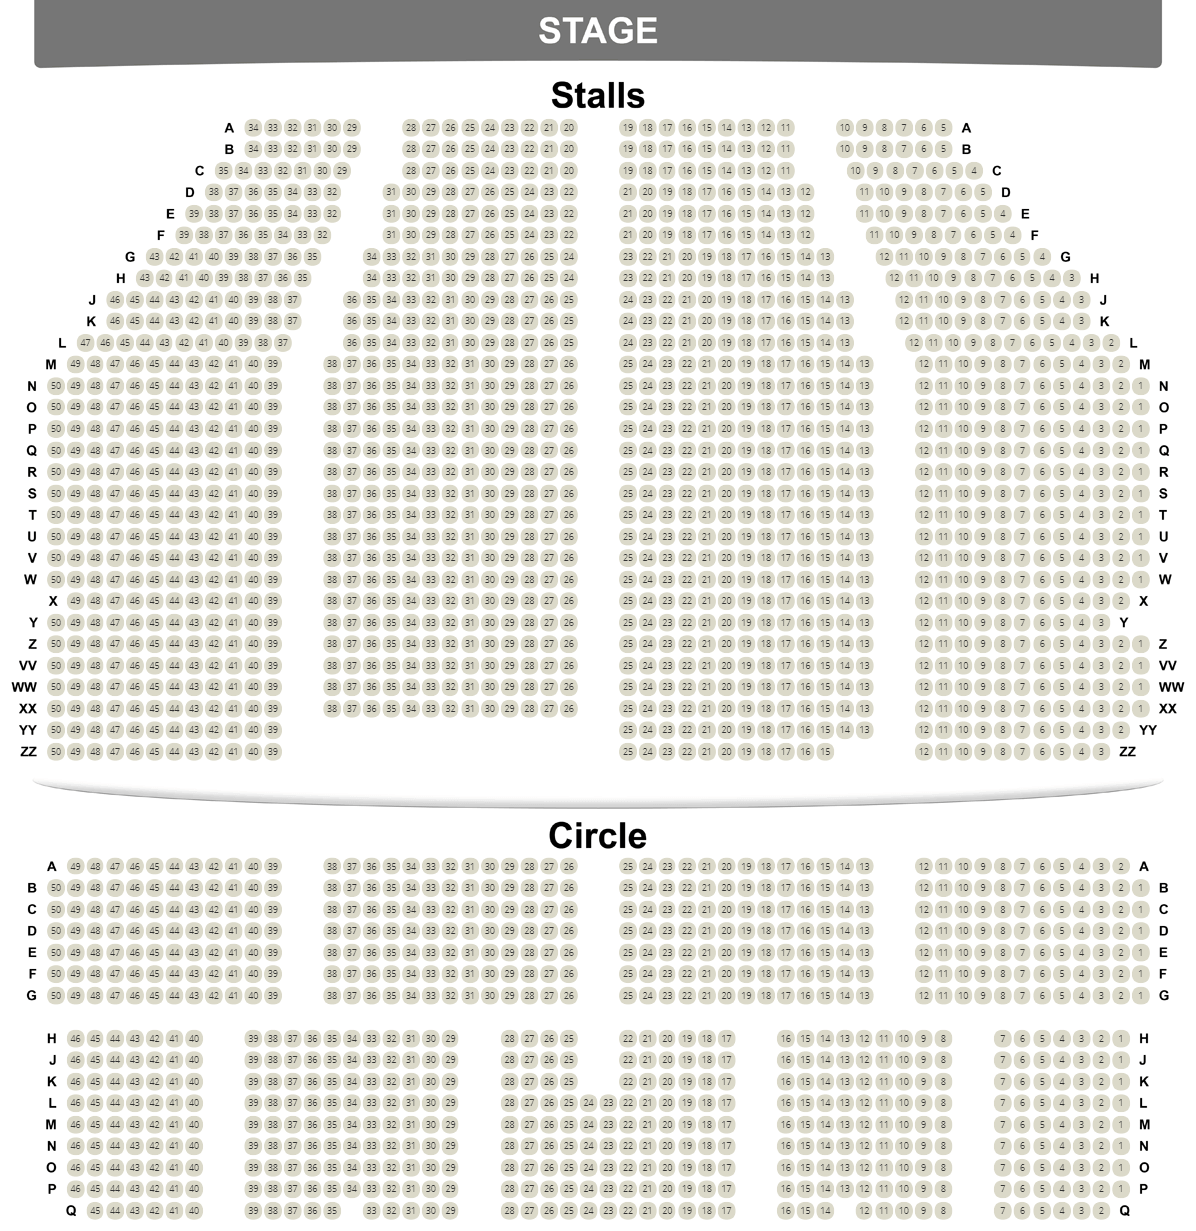 Dominion Theatre seating plan